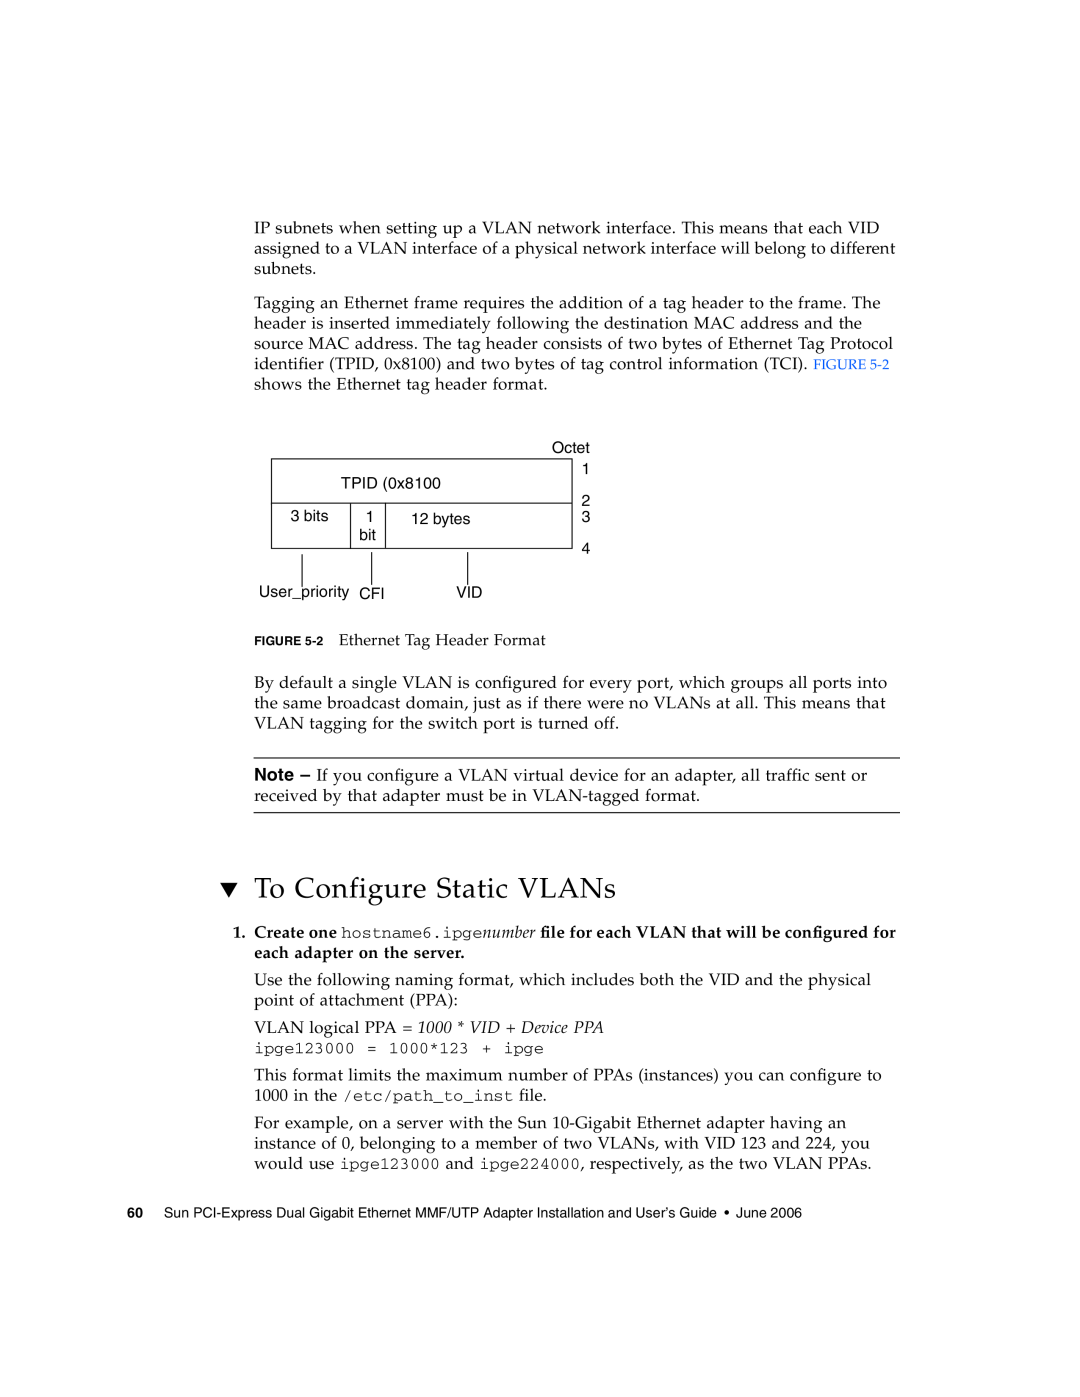 Sun Microsystems Gigabit Ethernet MMF/UTP Adapter manual To Configure Static VLANs 